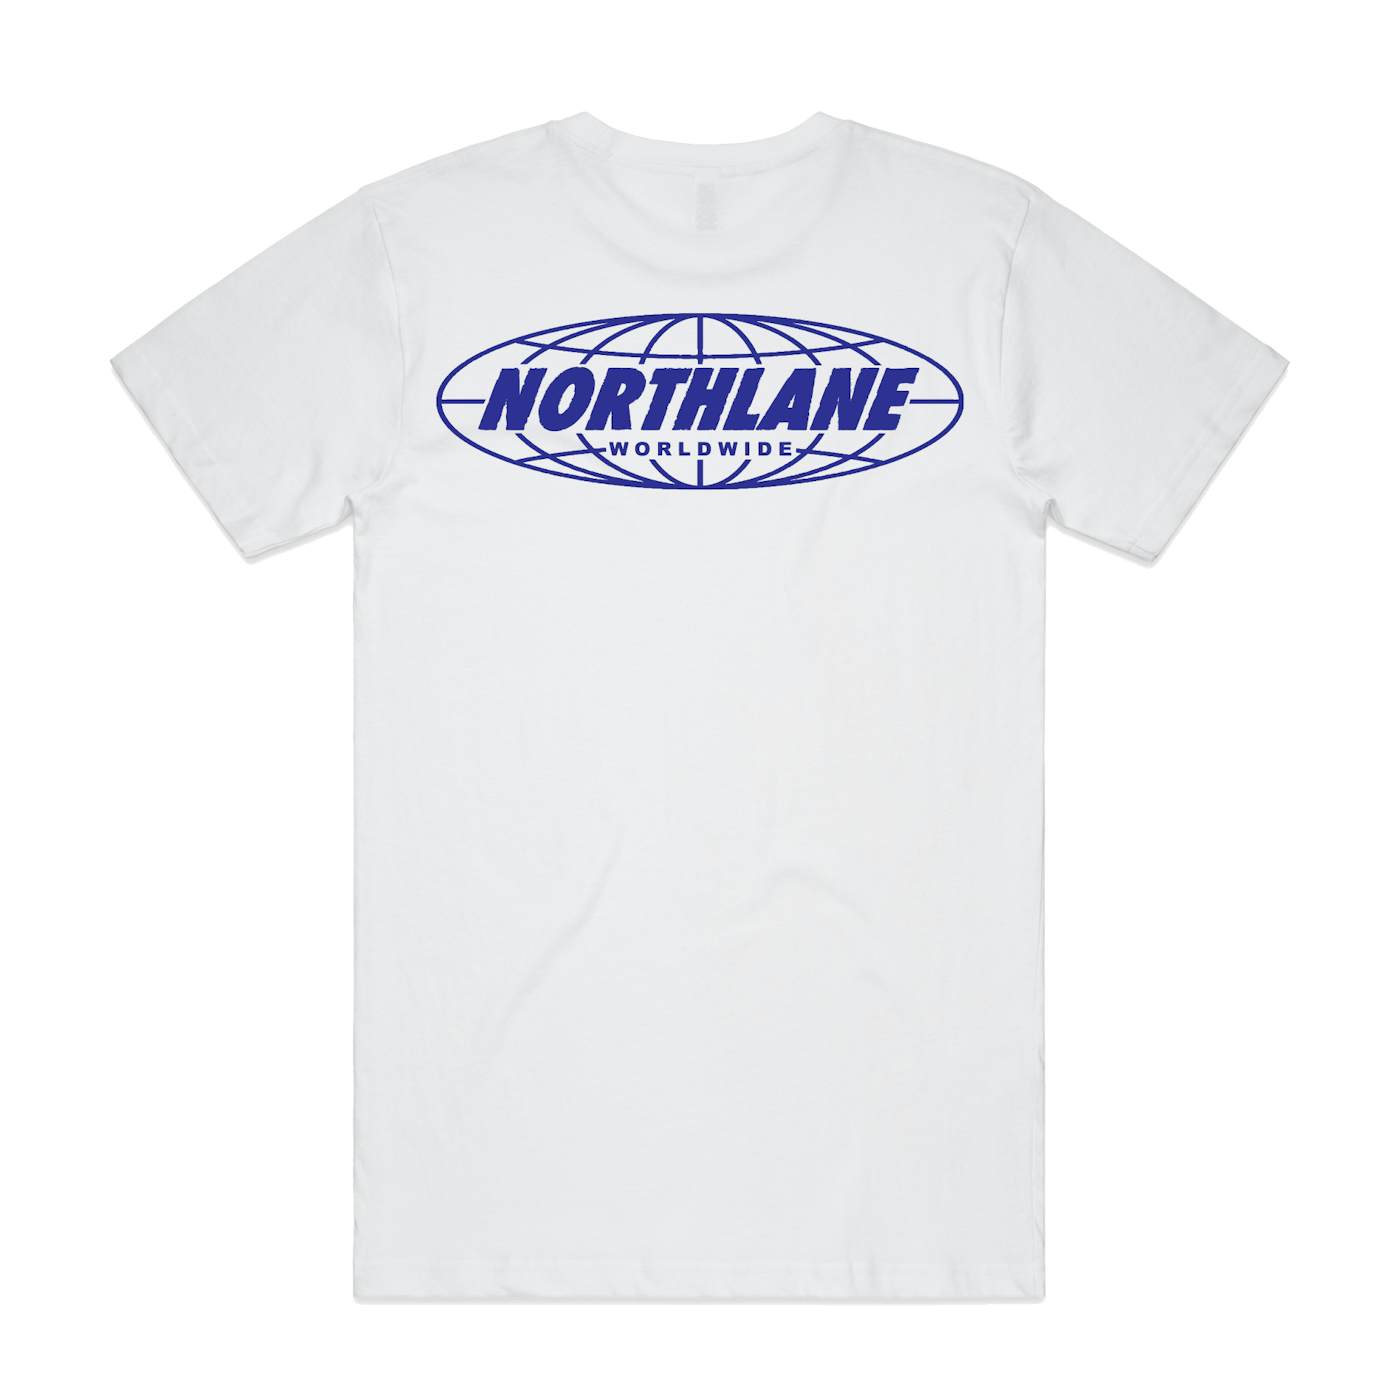 Northlane | Worldwide T-Shirt